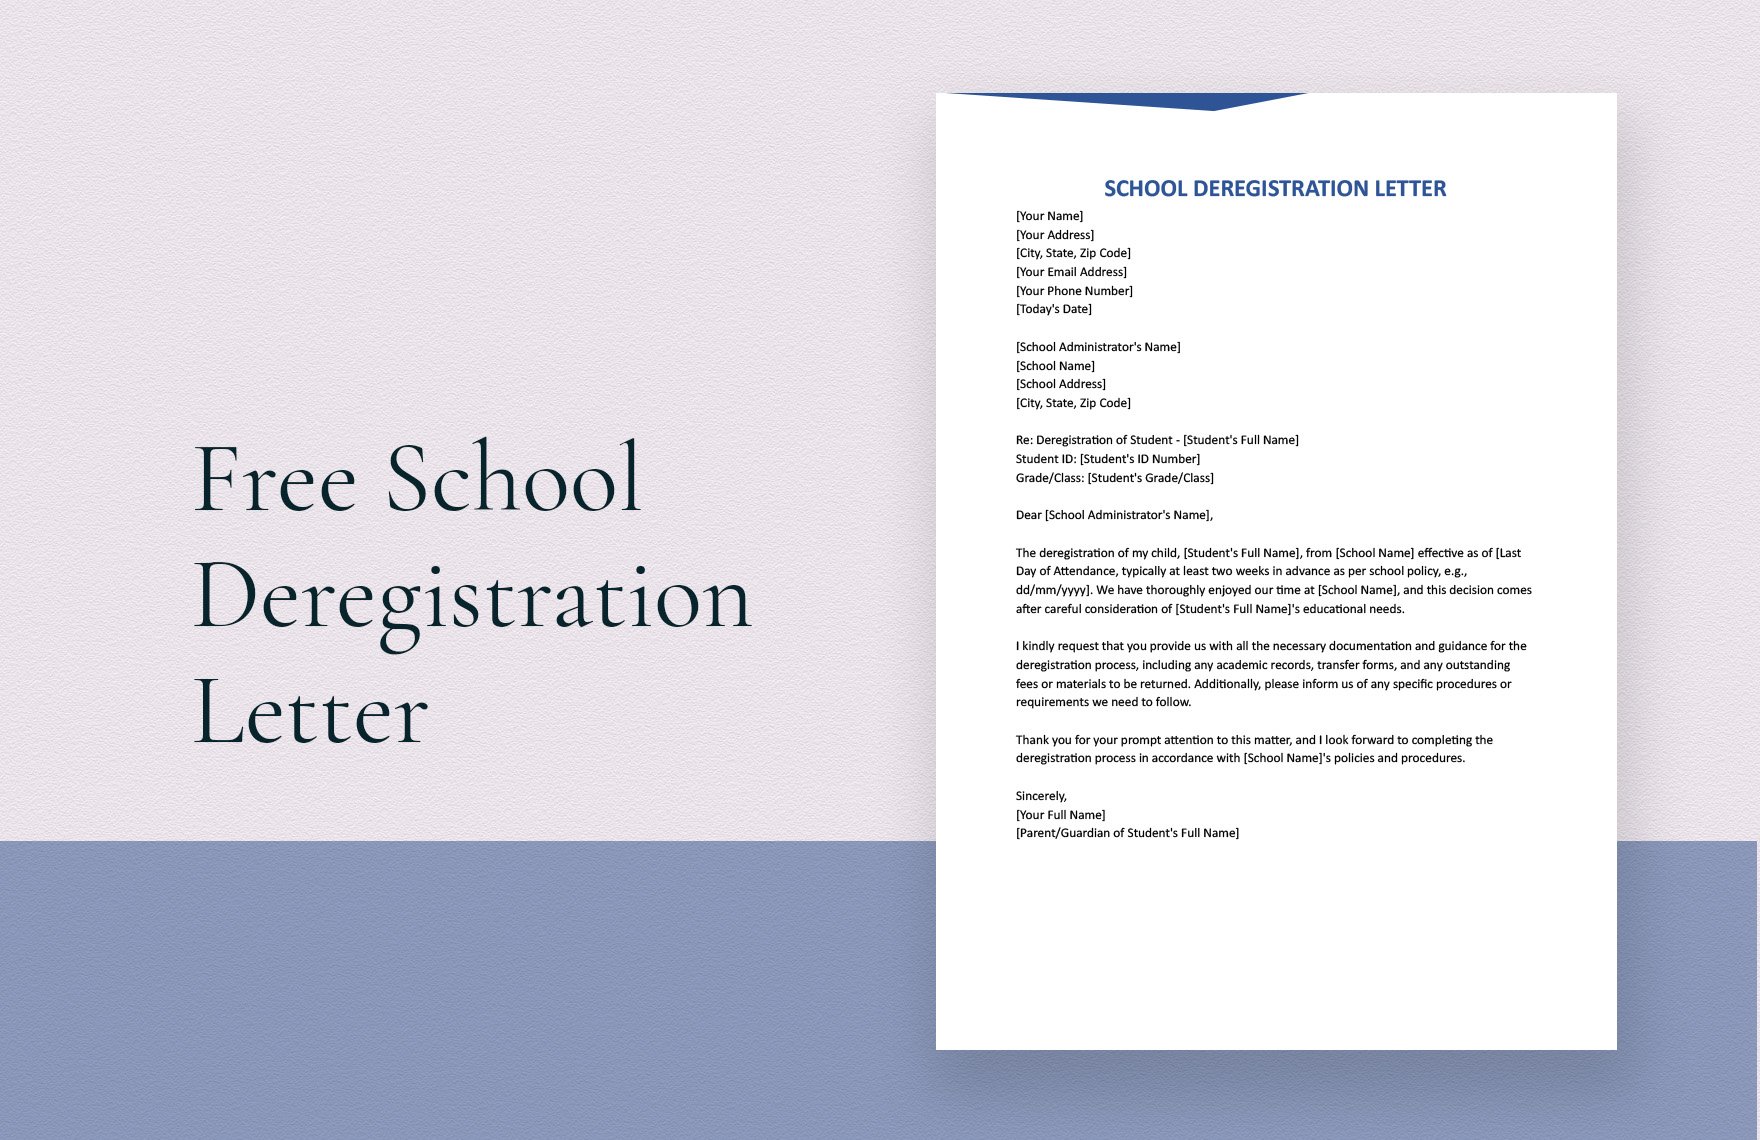 School Deregistration Letter